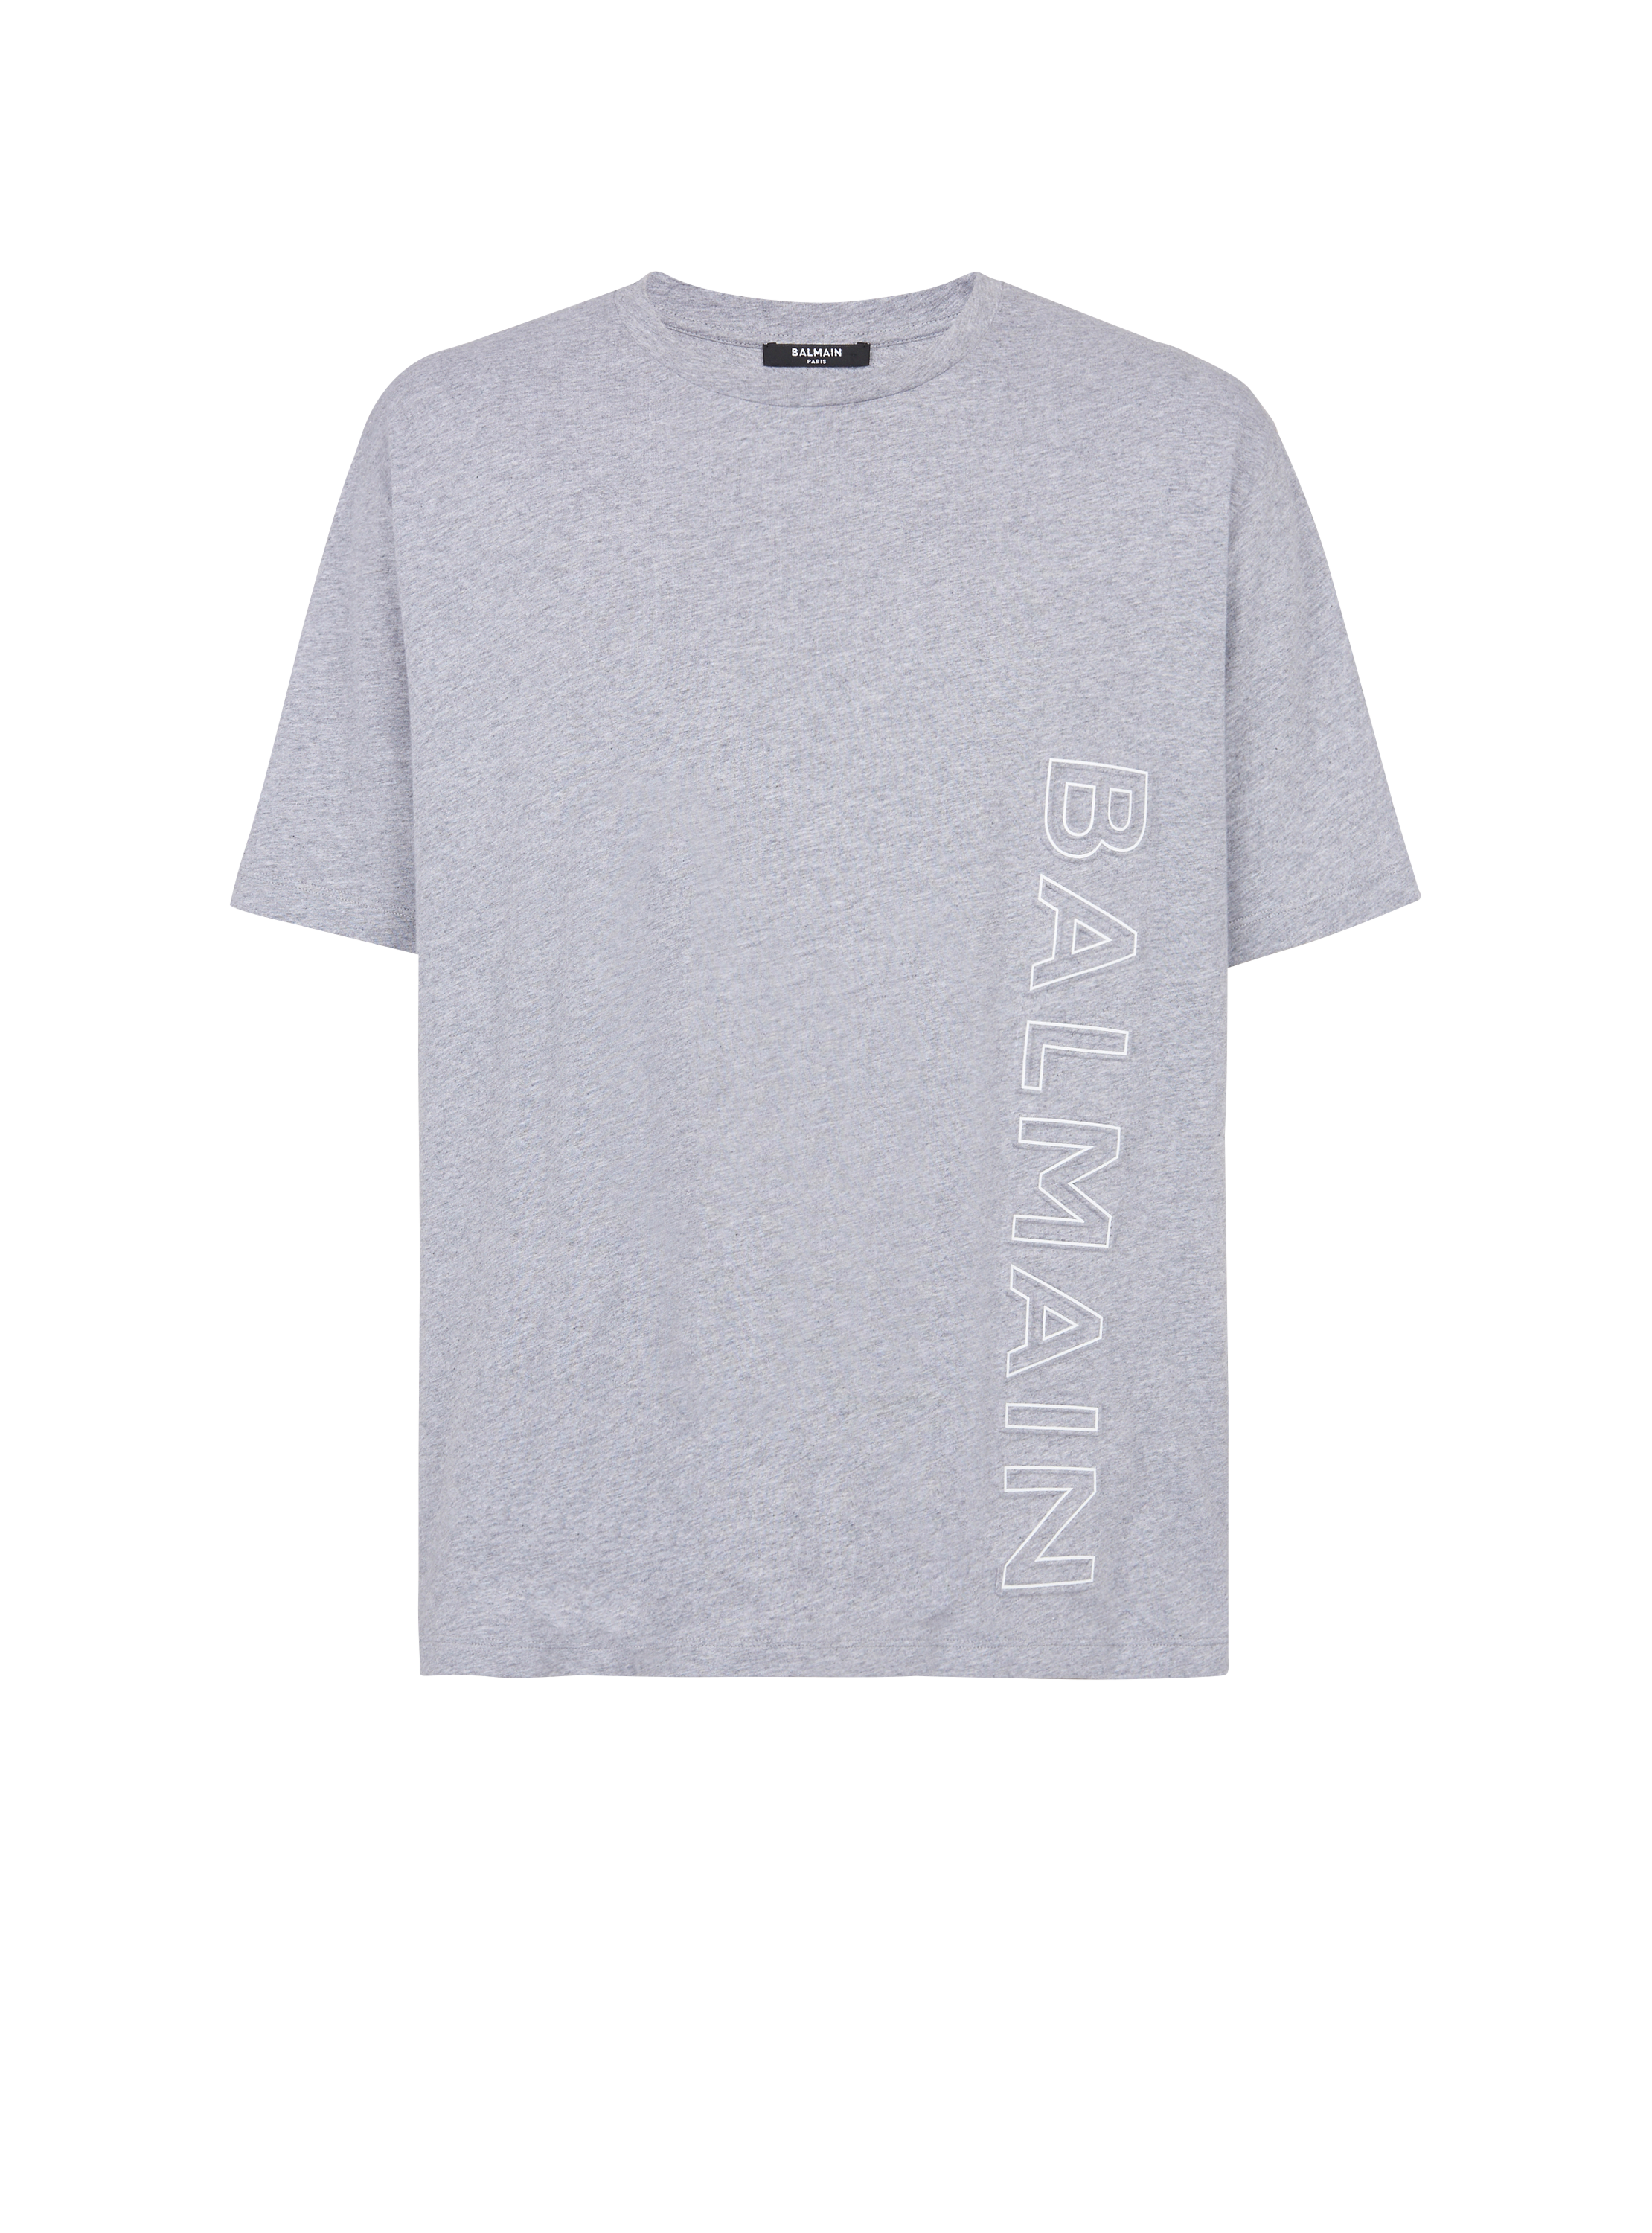 Balmain巴尔曼反光标志环保设计棉质T恤衫